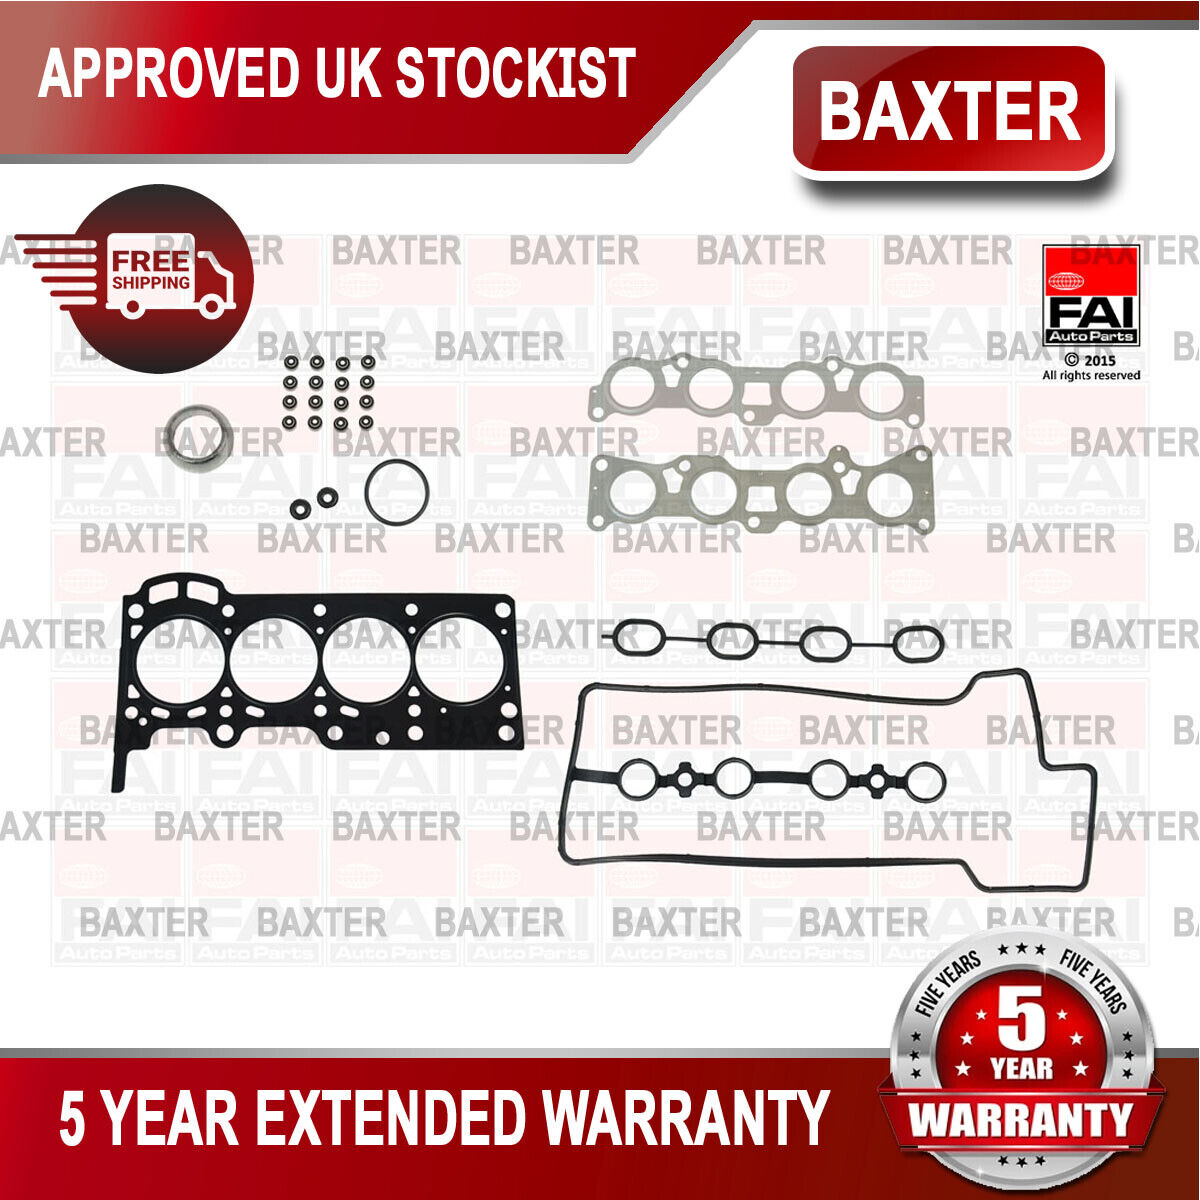 Fits Daihatsu Terios Sirion Storia YRV 1.3 Baxter Cylinder Head Gasket Set